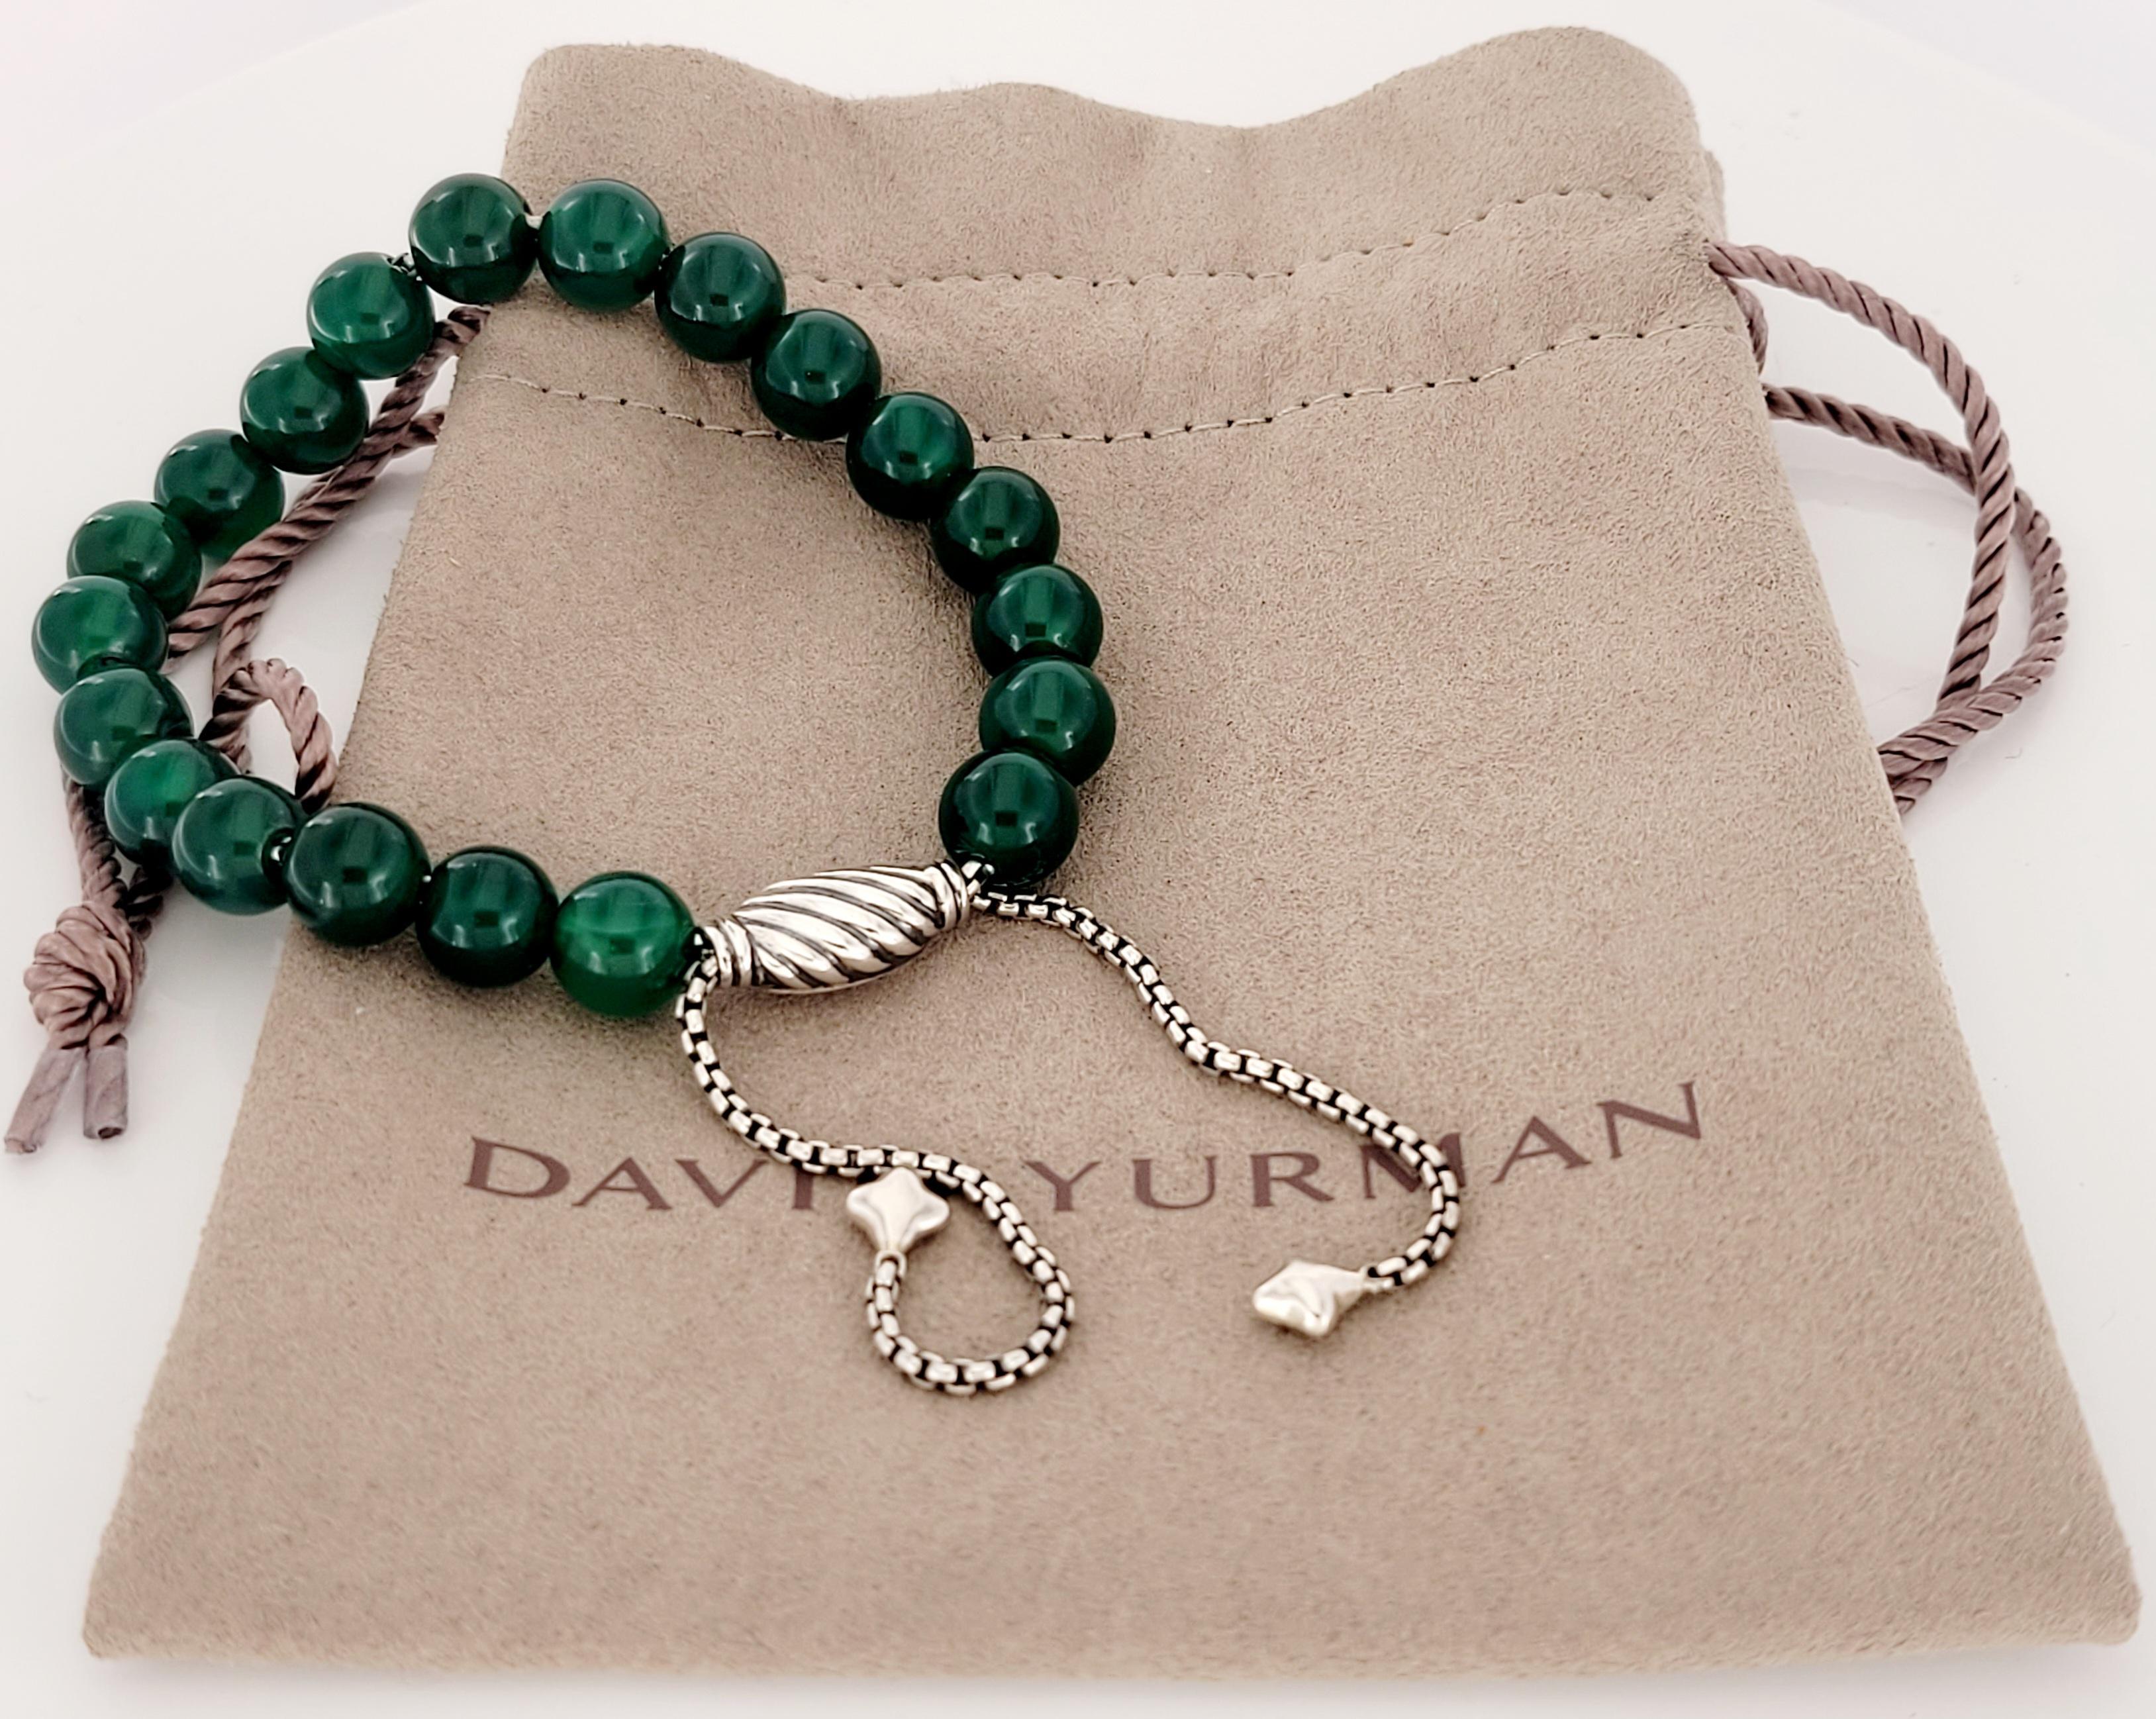 Brand David Yurman 
Gender Women's bracelet
Style Green beaded bracelet 
Onyx width 8mm
Hallmark (C)D.Y. David Yurman 925
David Yurman pouch included
Condition New Never Worn